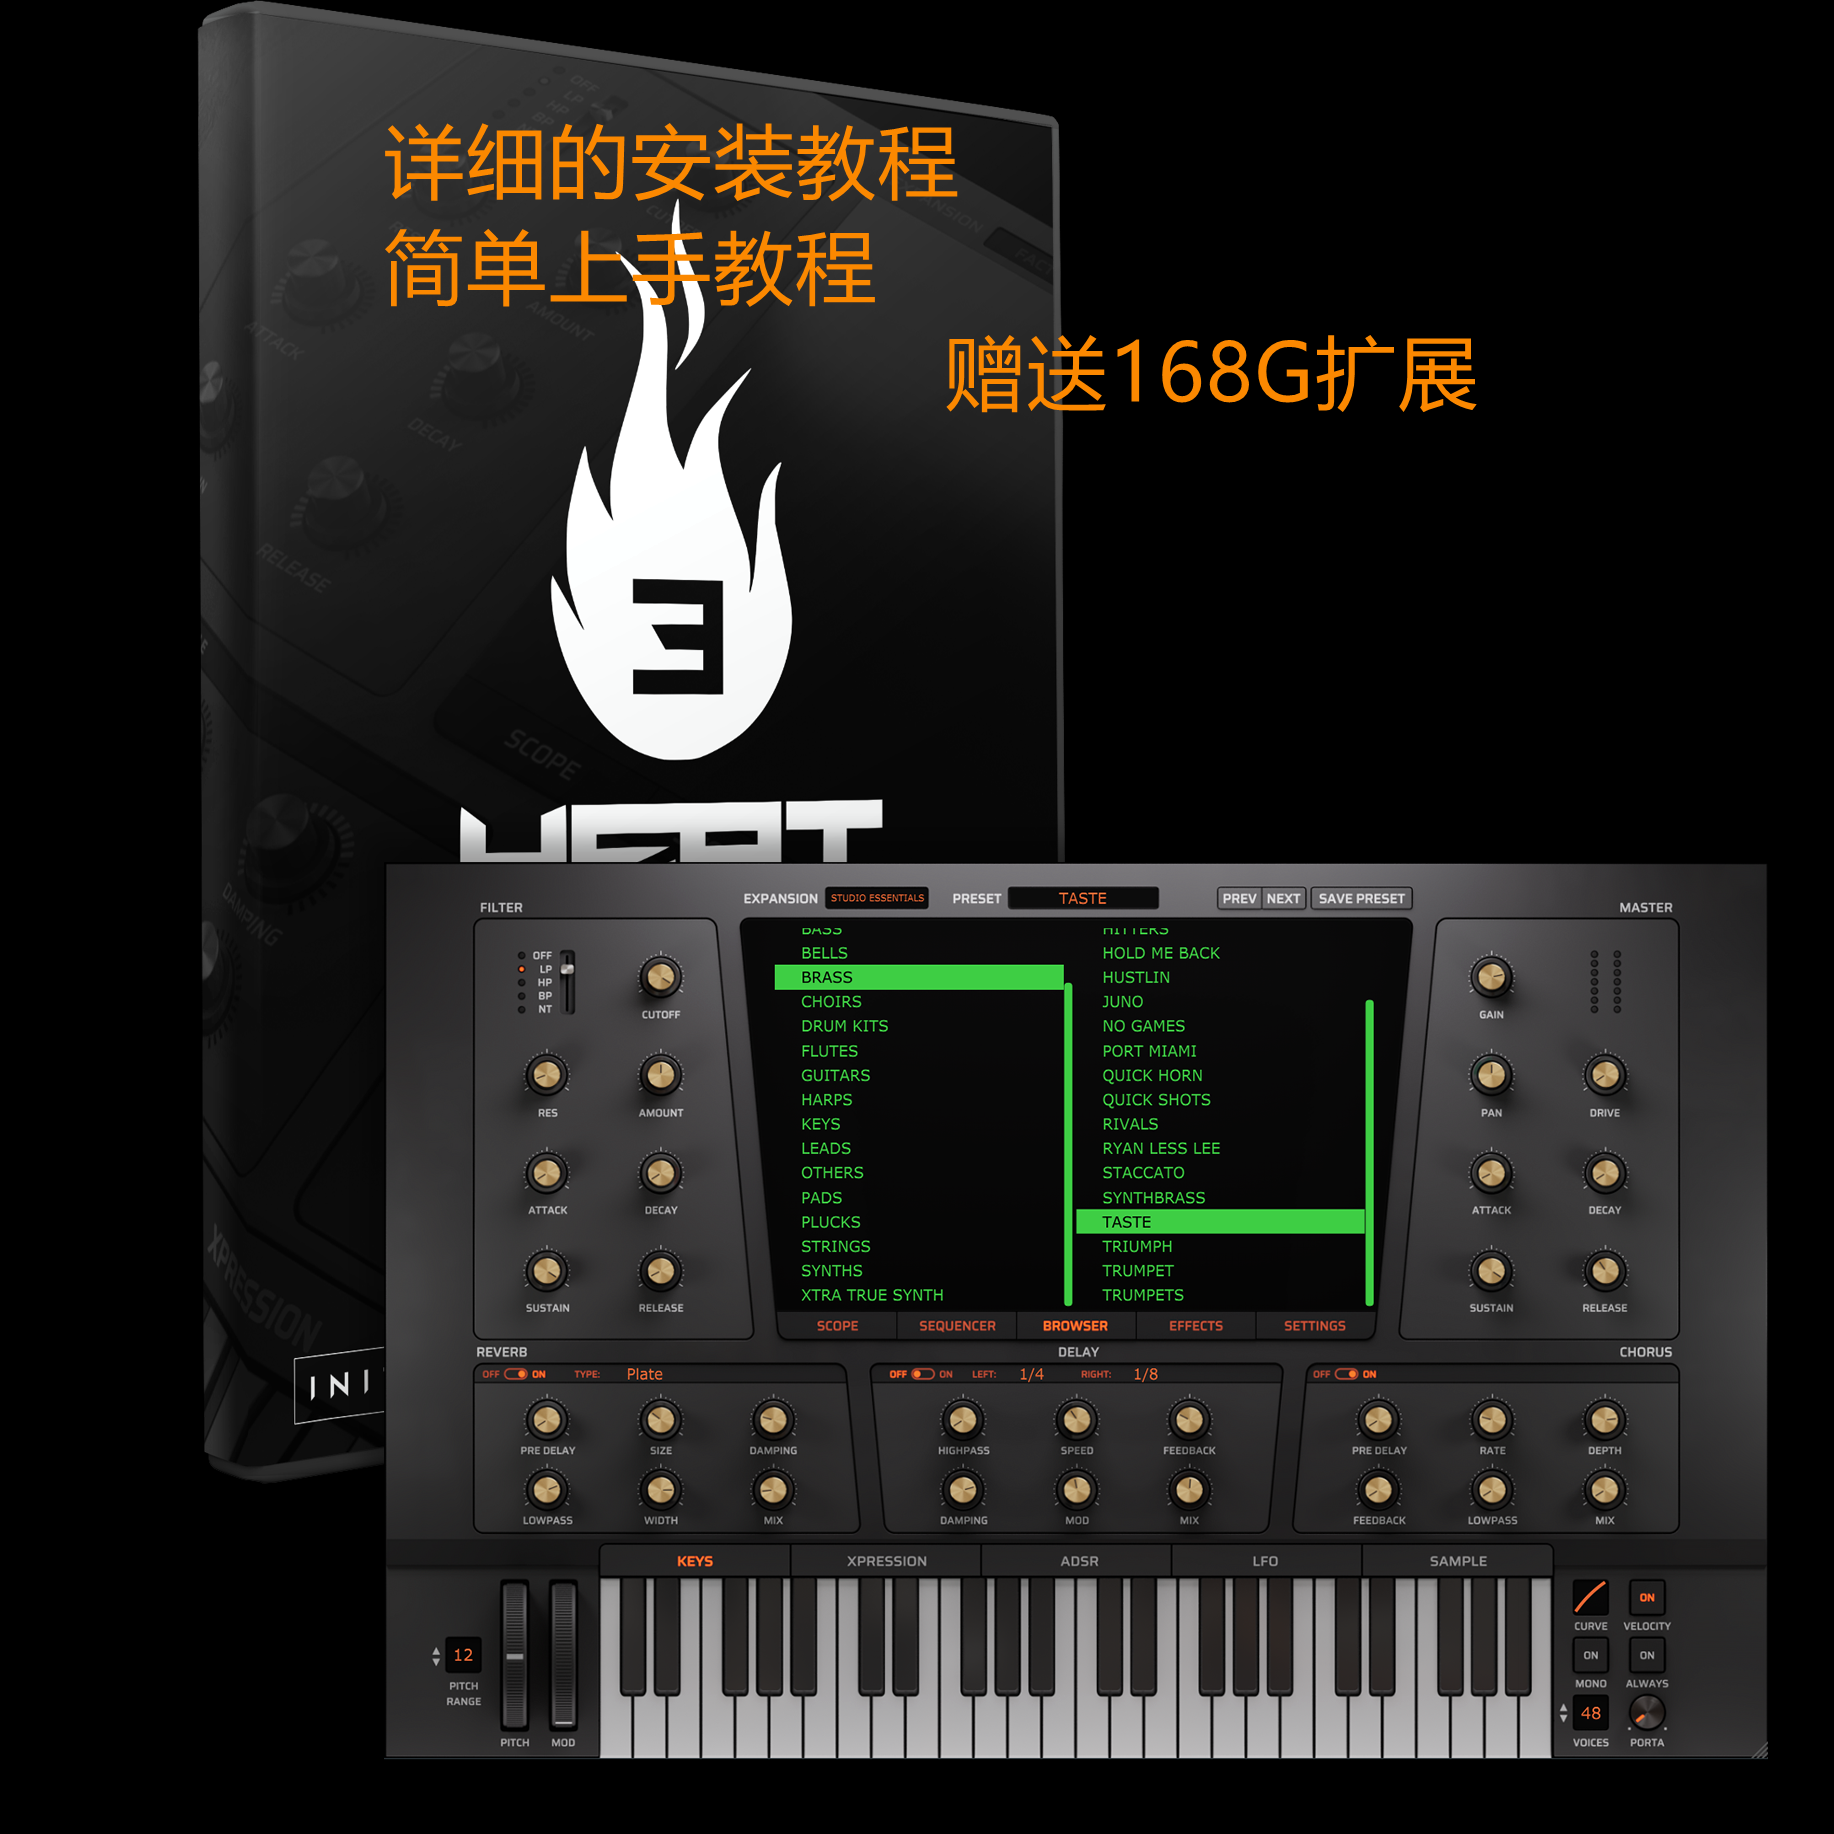 heat up 3嘻哈Beat音源合成器插件Trap音色PC/MAC赠送168G扩展